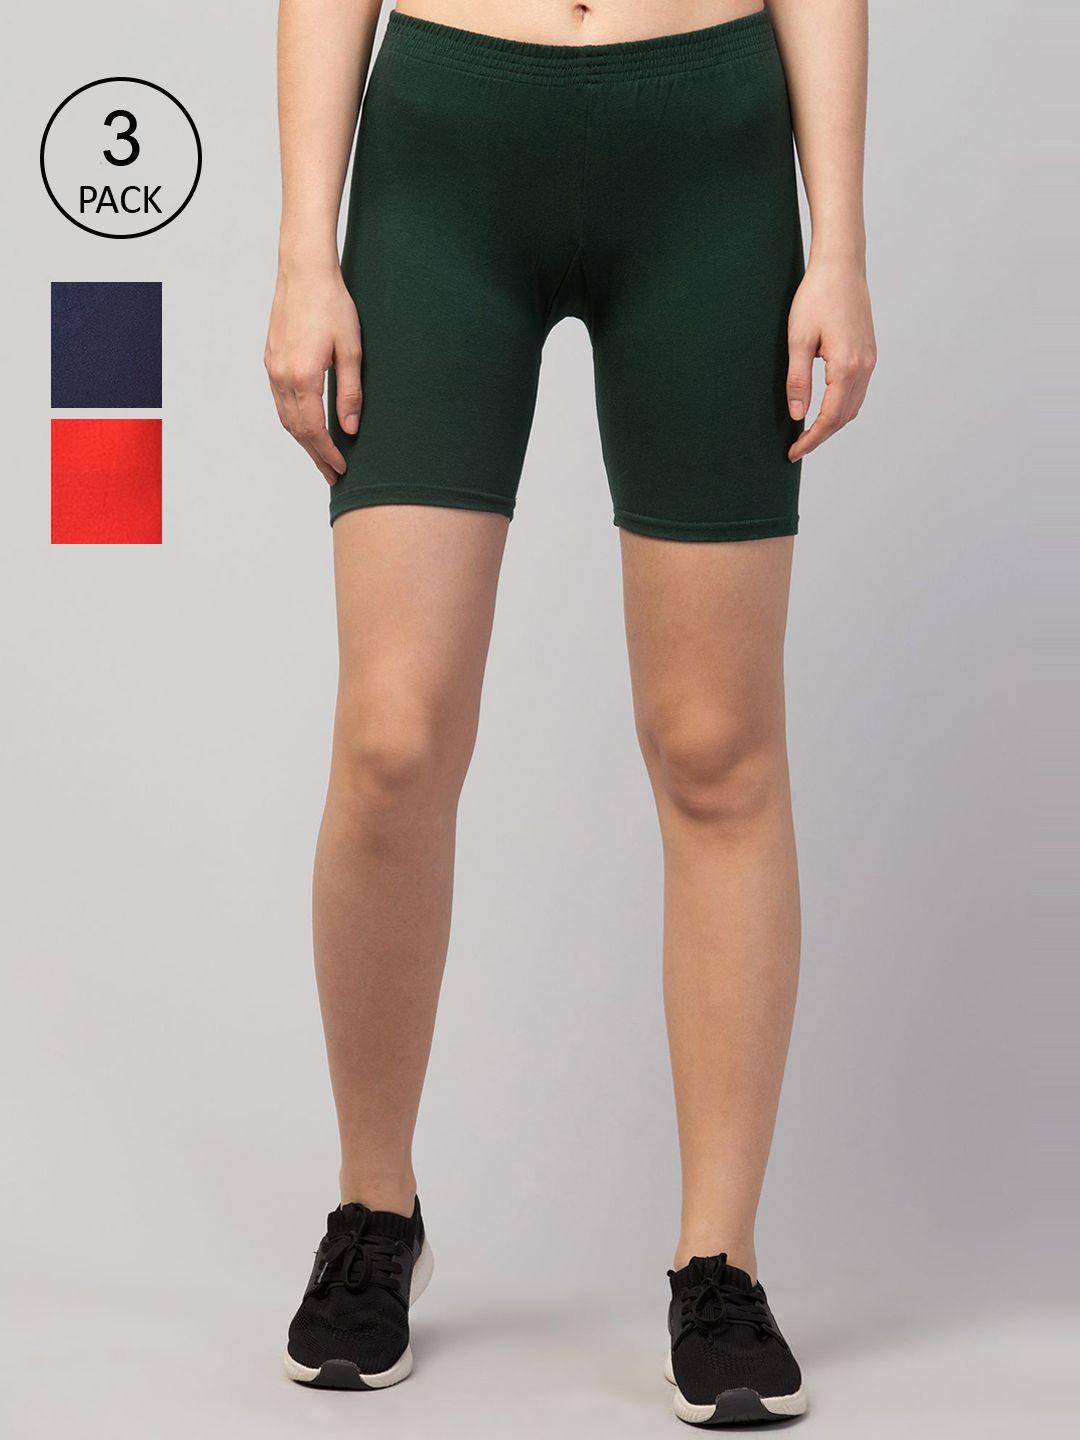 apraa & parma women set of 3 green slim fit cycling sports shorts